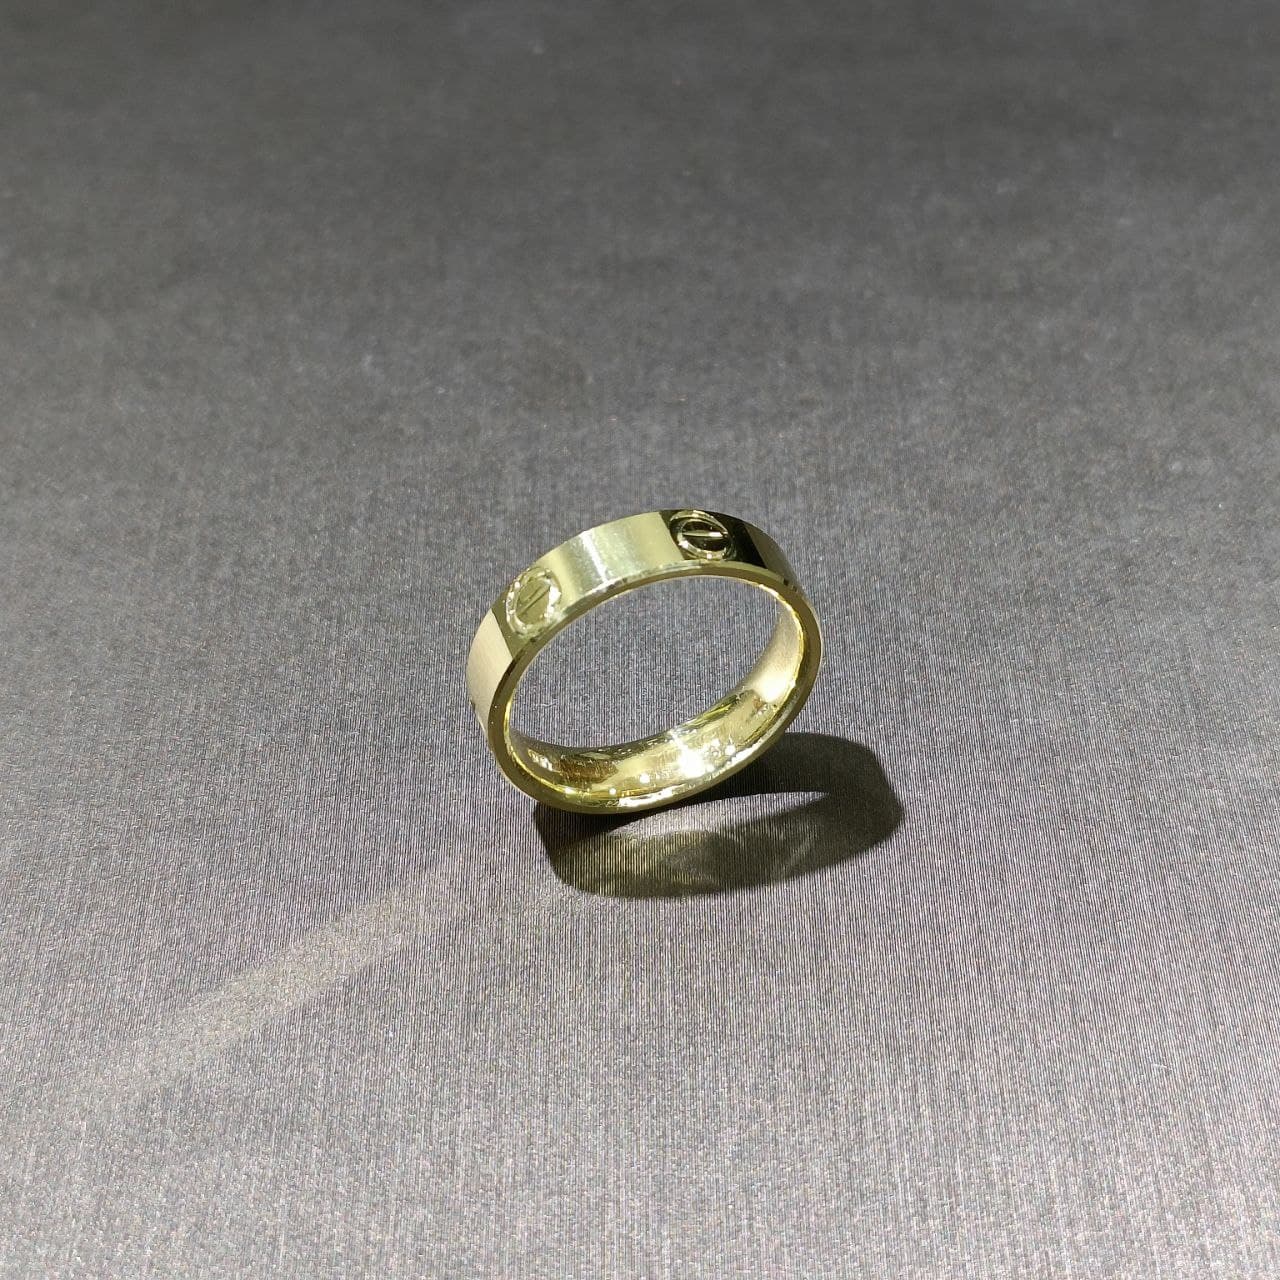 22k / 916 Gold C Design Ring heavy version-Rings-Best Gold Shop